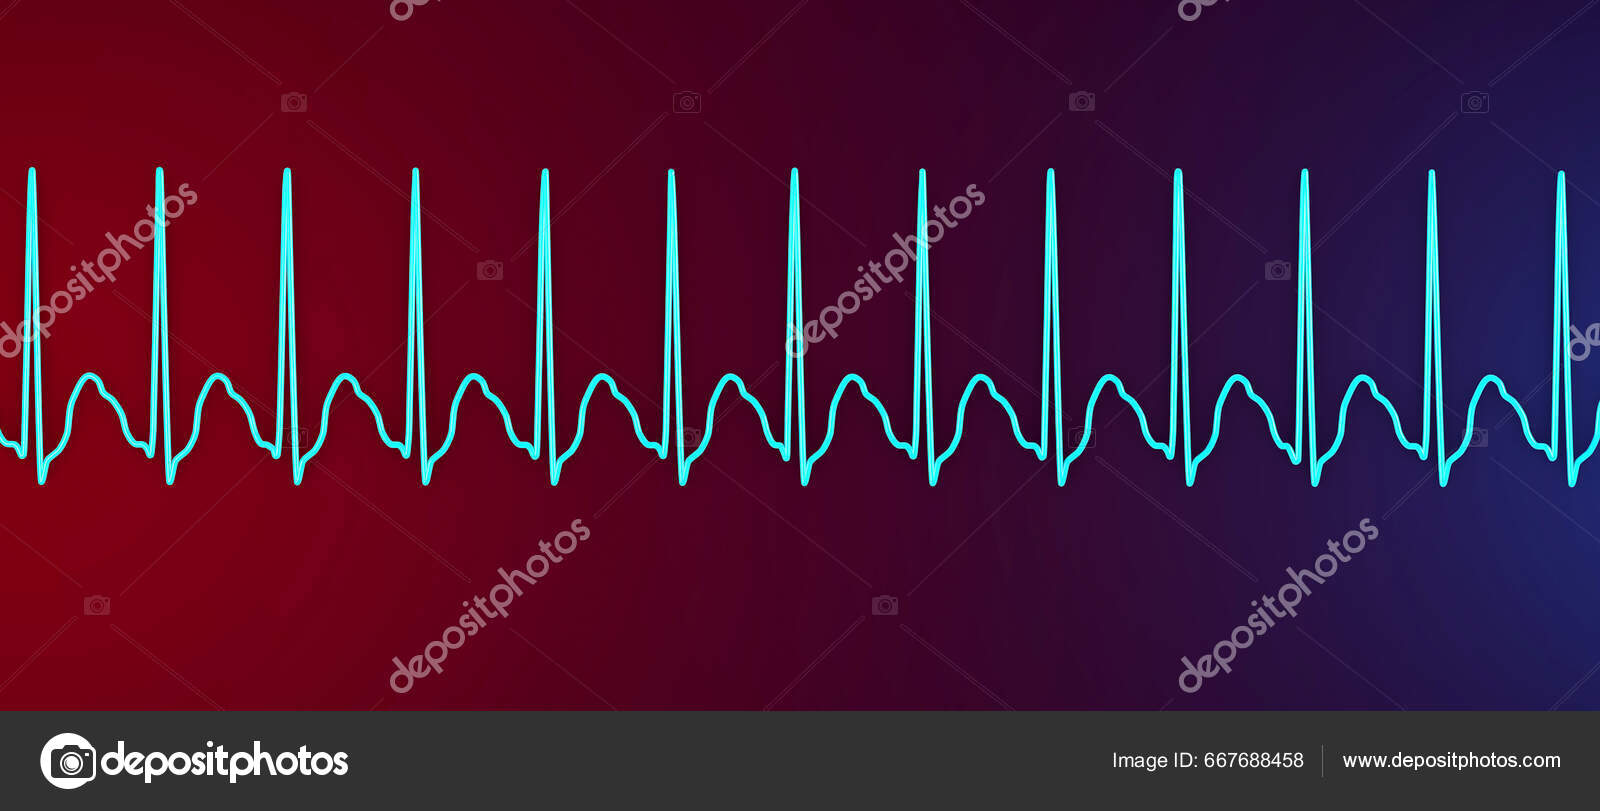 Tachycardia: Fast Heart Rate